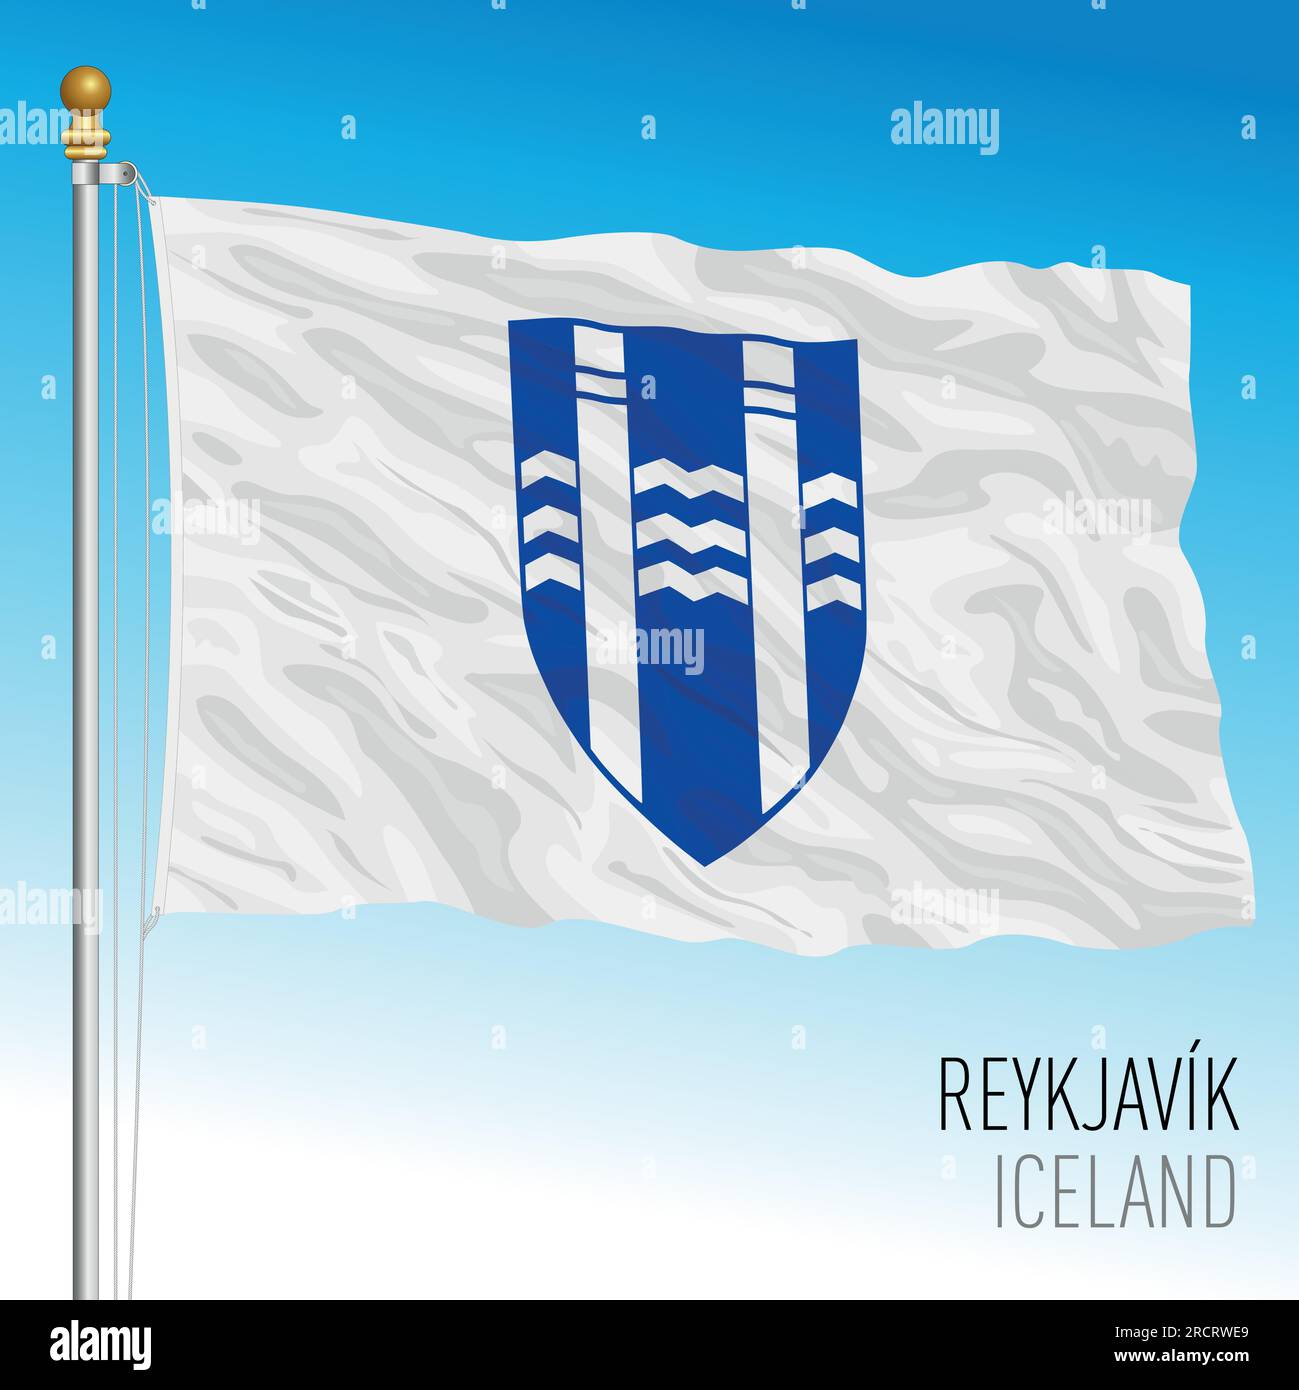 Reykjavik City fanion drapeau, Islande, Europe, illustration vectorielle Illustration de Vecteur